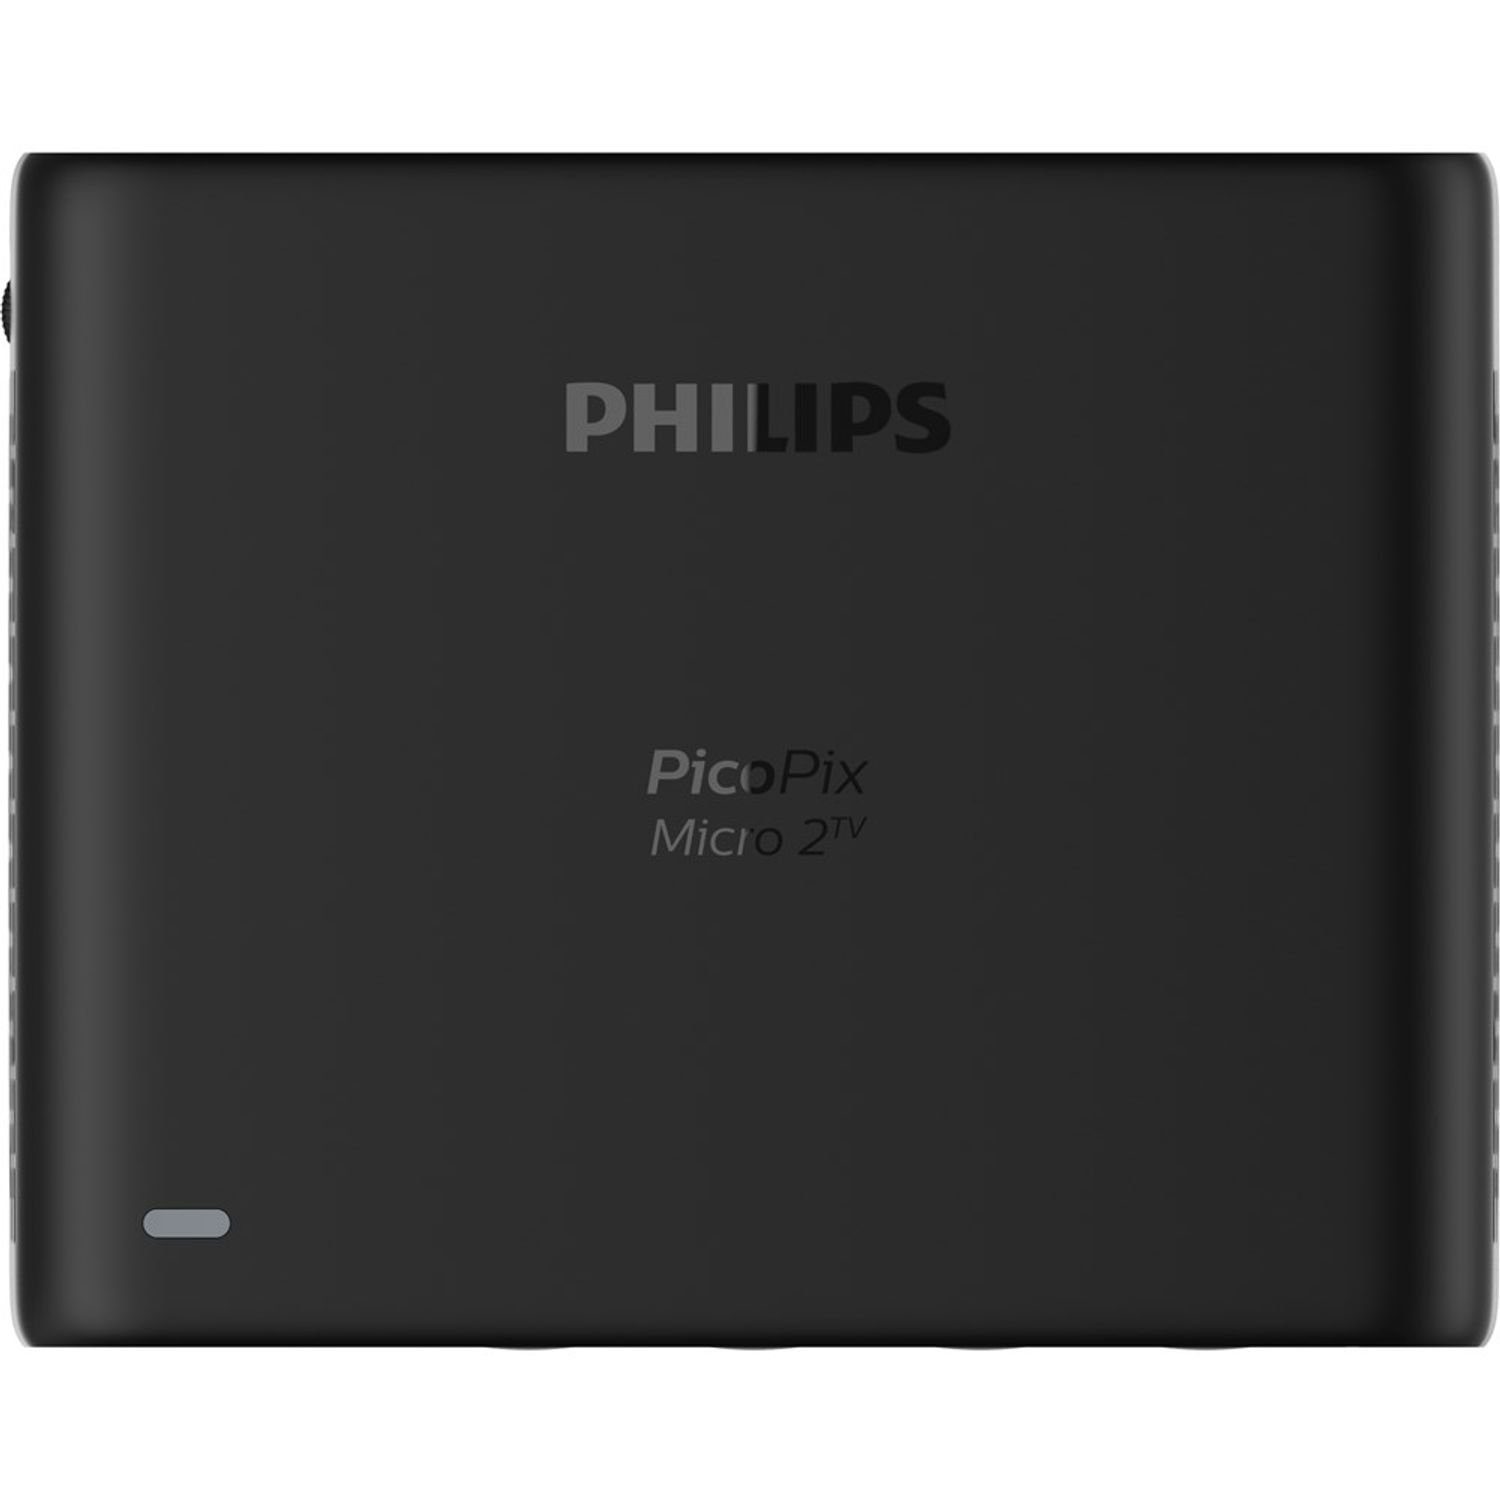 WLAN, Micro Std. Android px, 854 Android Philips 480 TV 2TV 80" (600:1, Portabler 80'', TV, x Projektor Beamer PicoPix 10W DSP Stereo-Lautsprecher,4 10.0 zu bis Laufzeit)